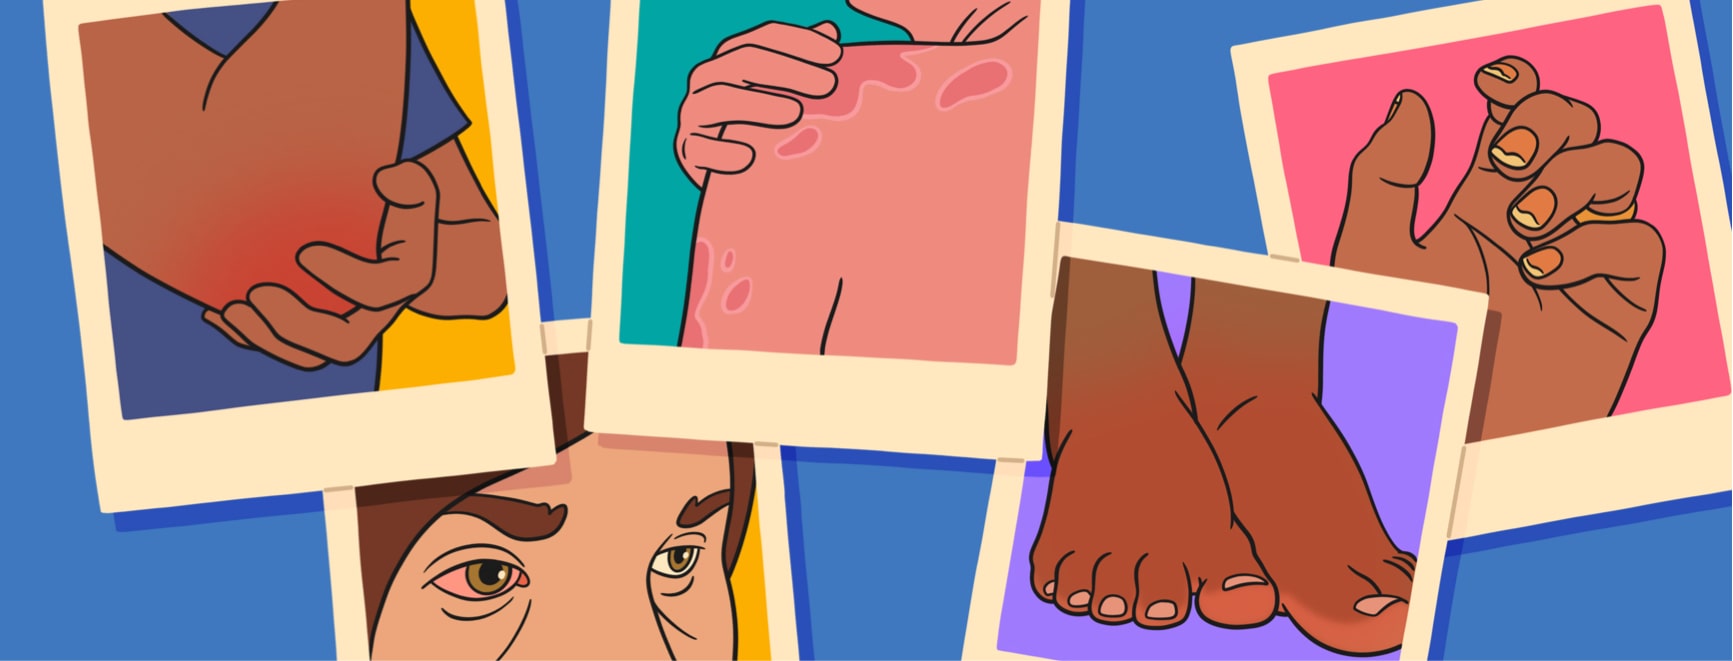 Several unique symptoms of psoriatic arthritis are presented in a collage of polaroid snapshots.